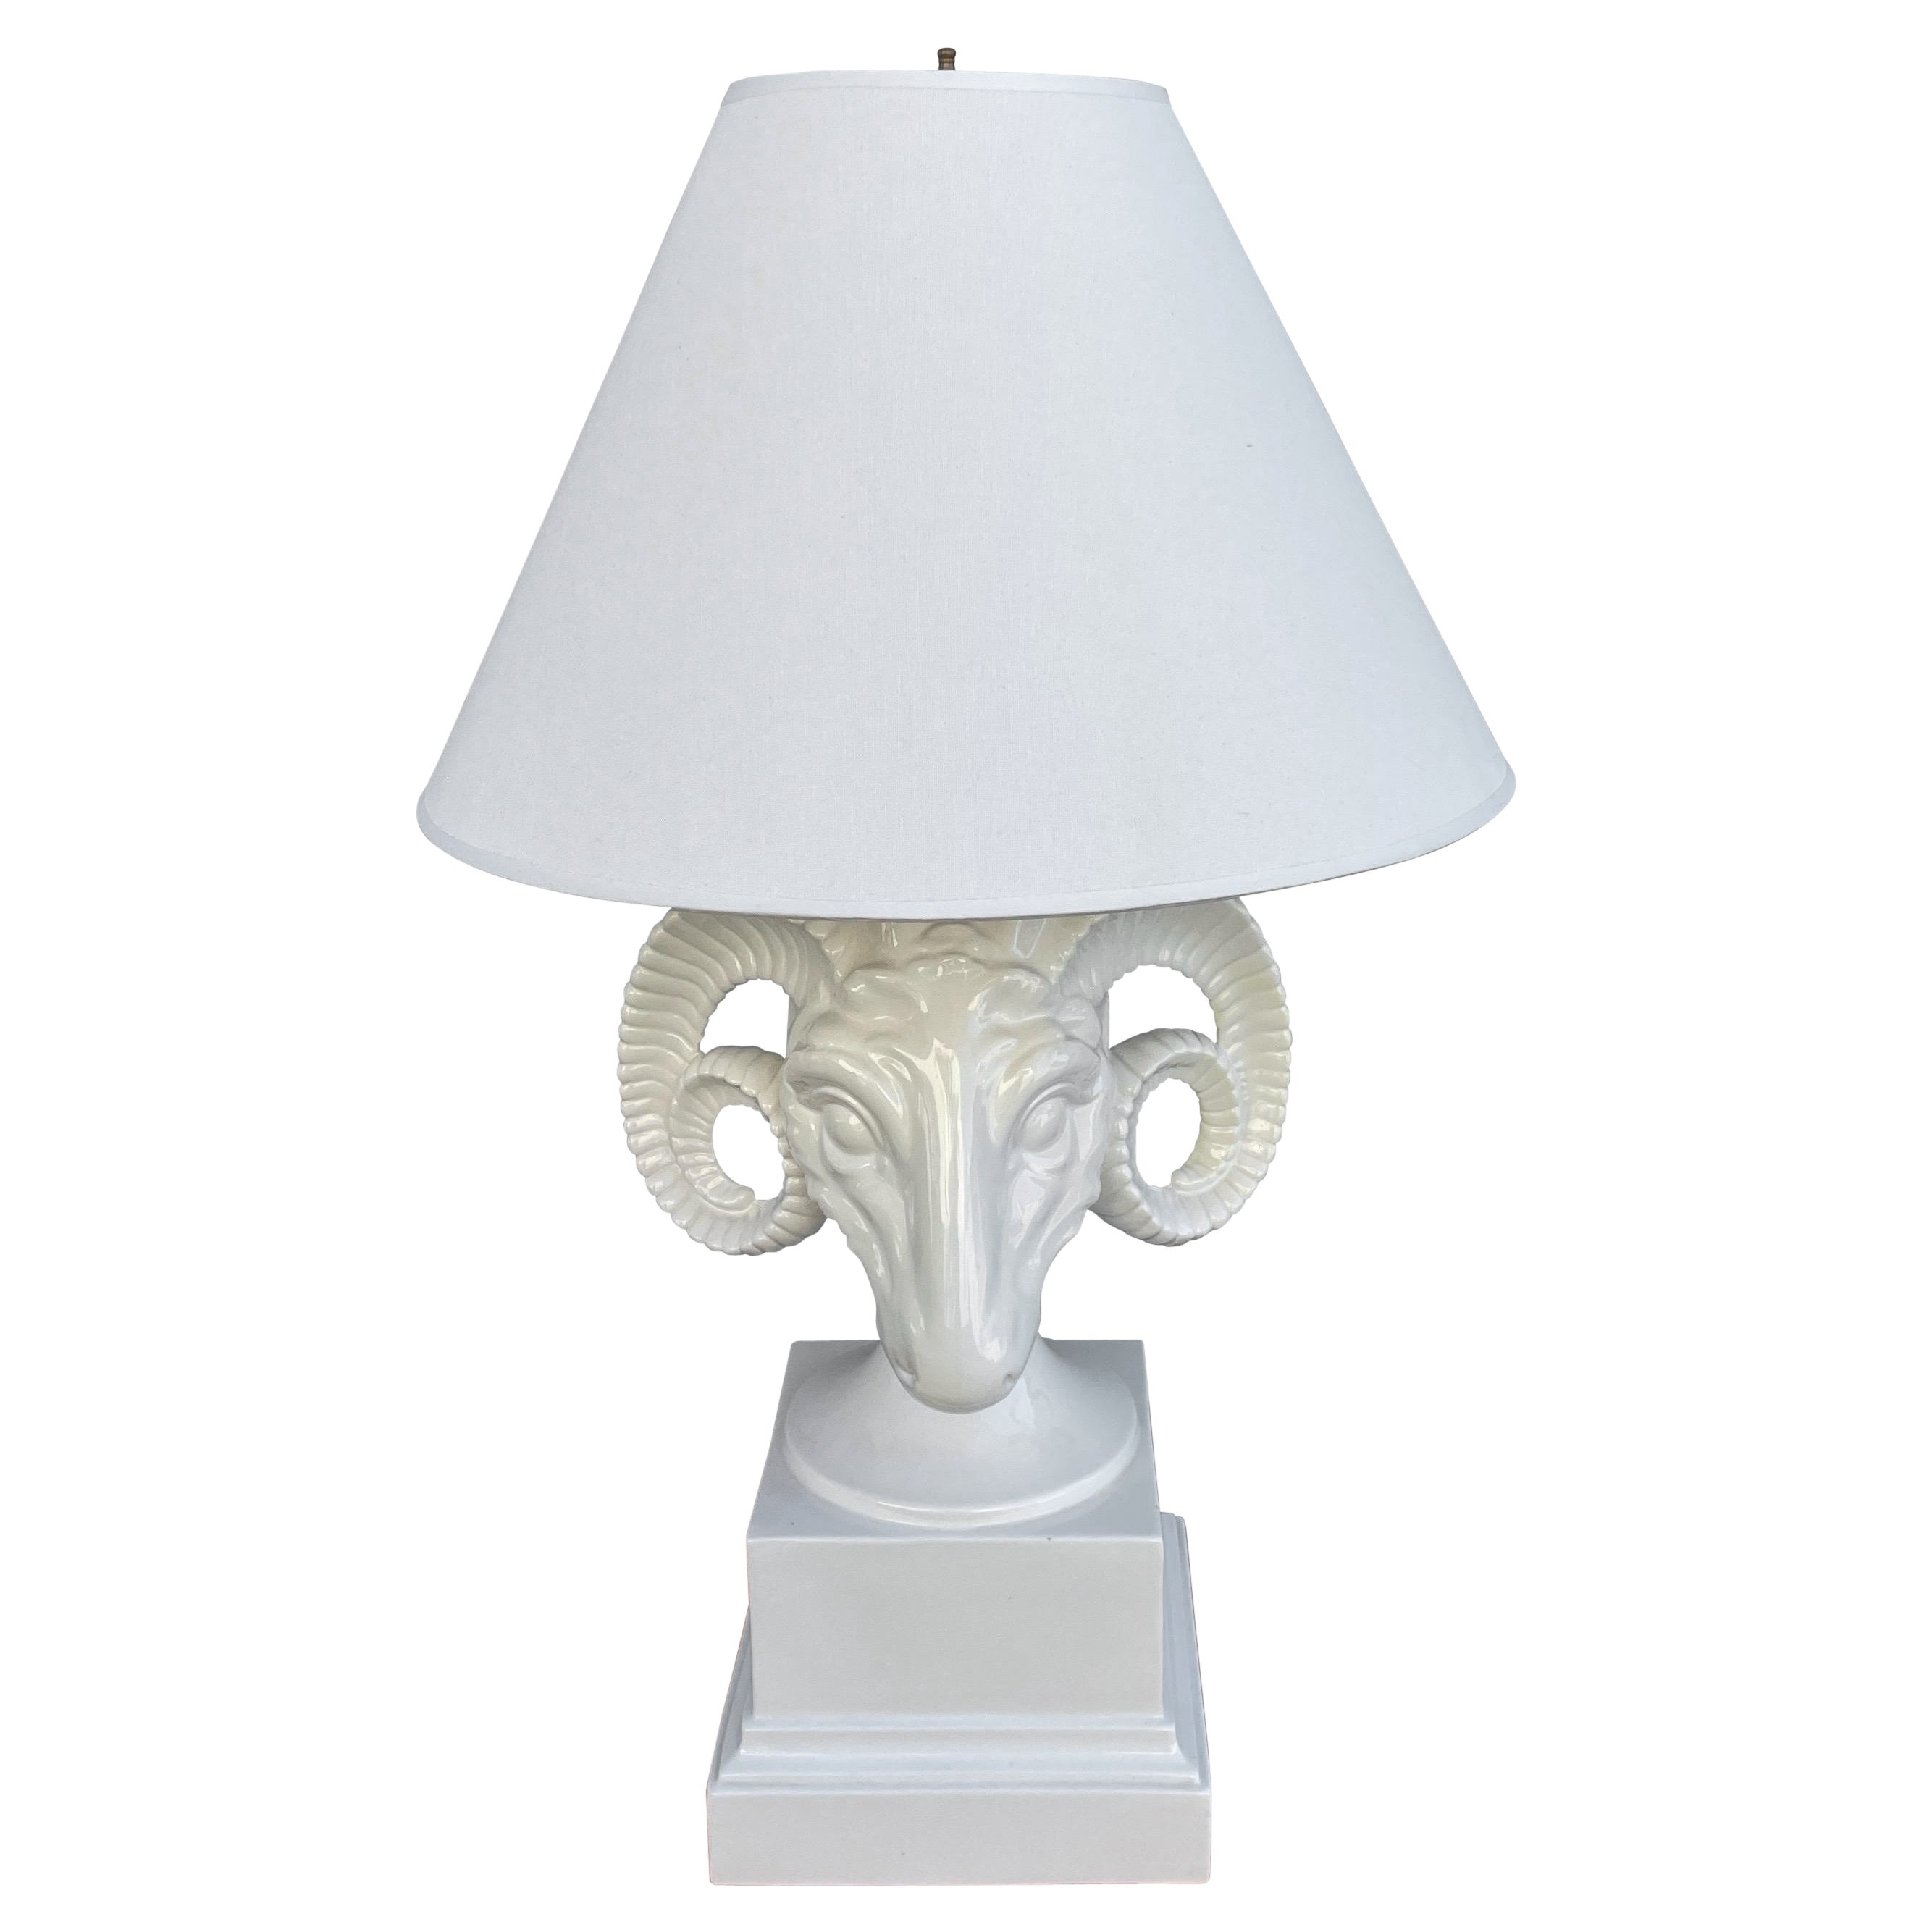 Vintage White Porcelain Ram's Head Lamp by Chapmam